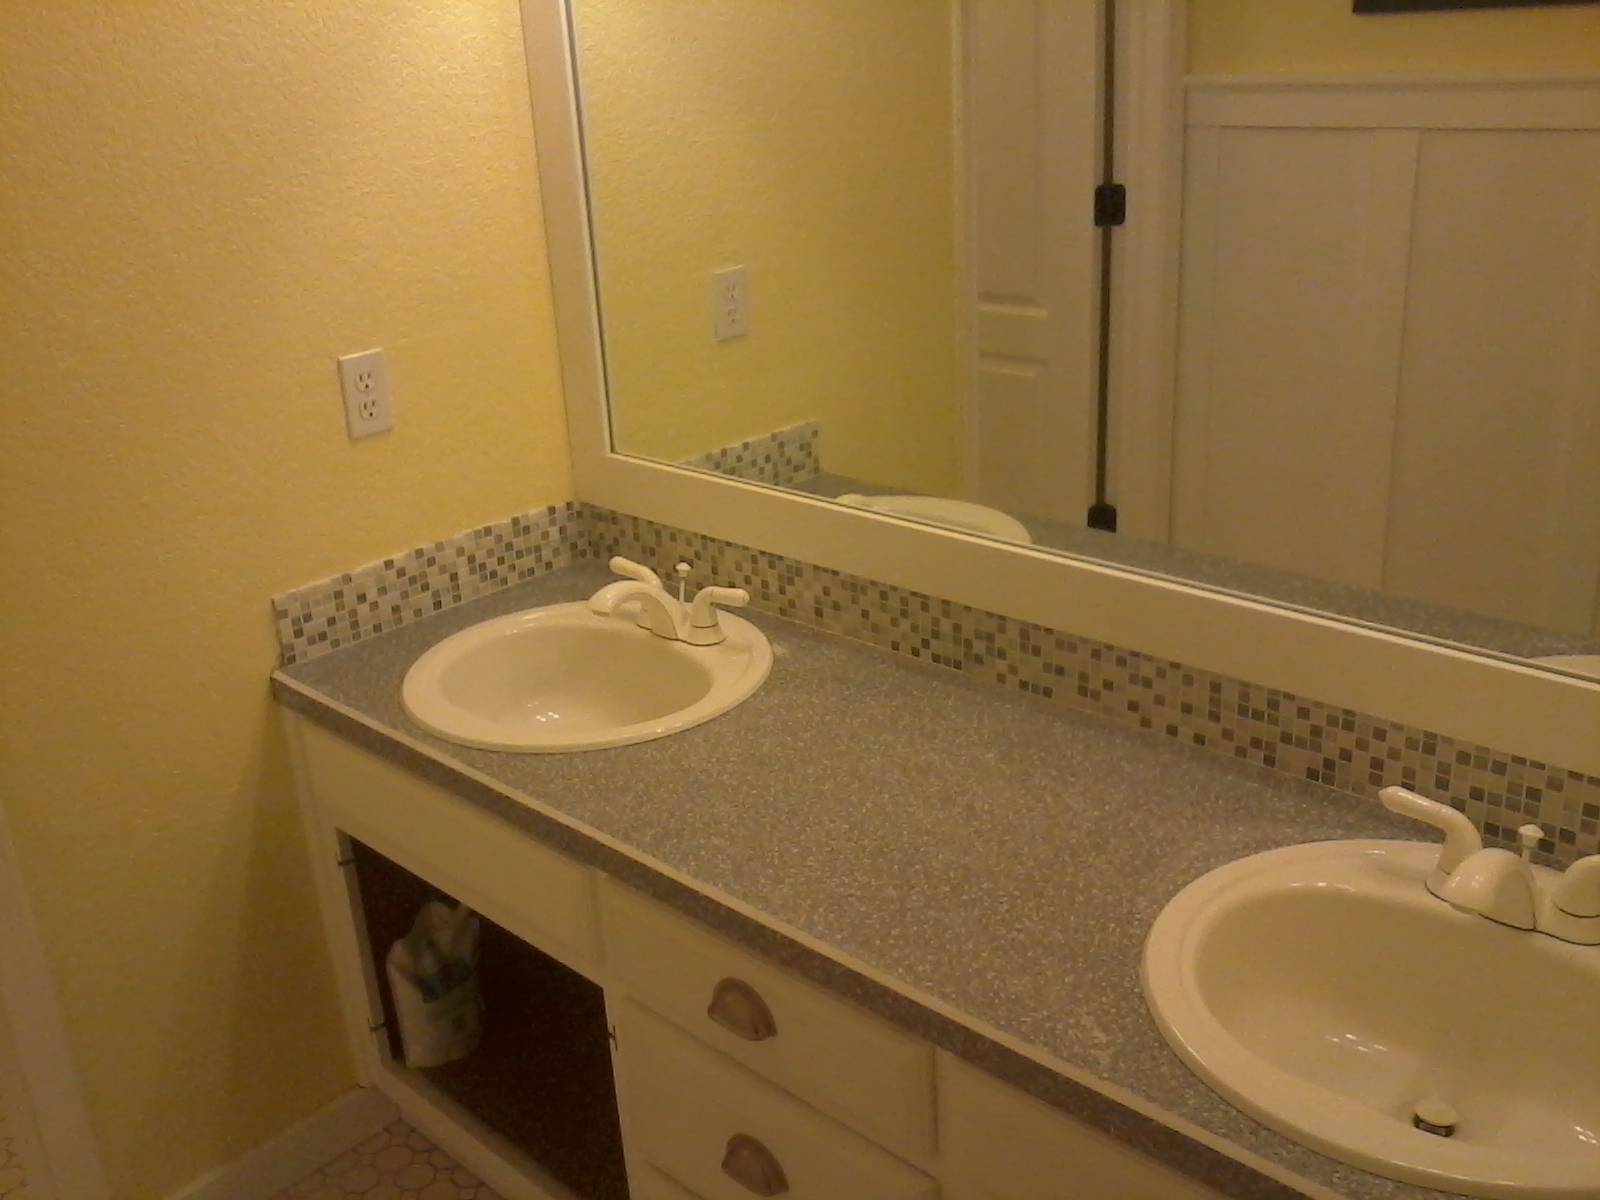 mosaic tile for bathroom backsplash | Simply Rooms (by design)